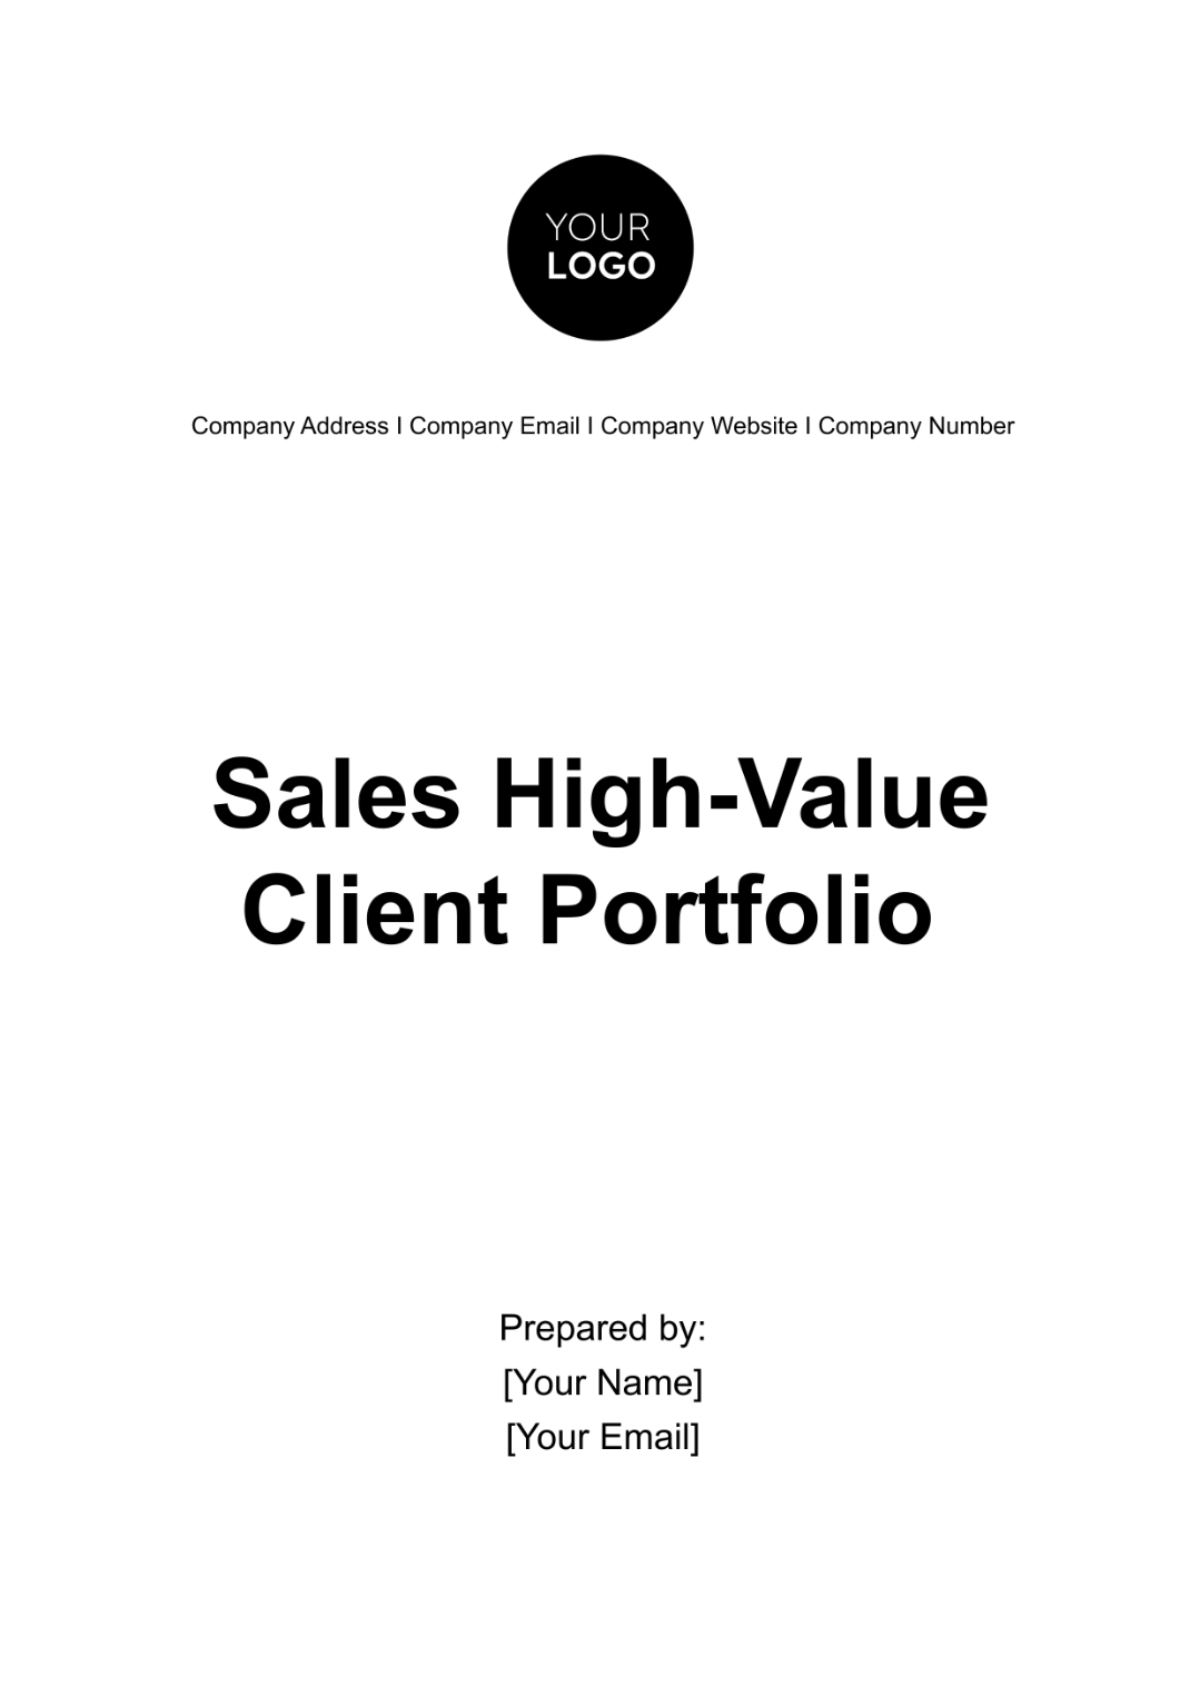 Sales High-Value Client Portfolio Template